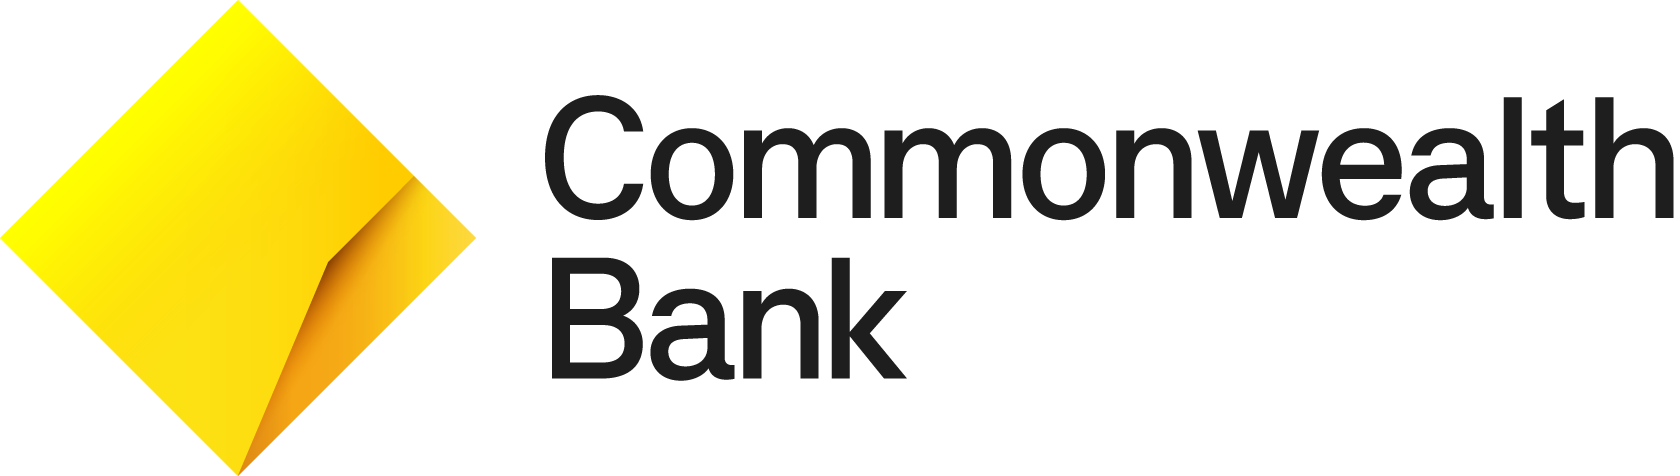 Comm Bank Logos Beacon Wordmark Black